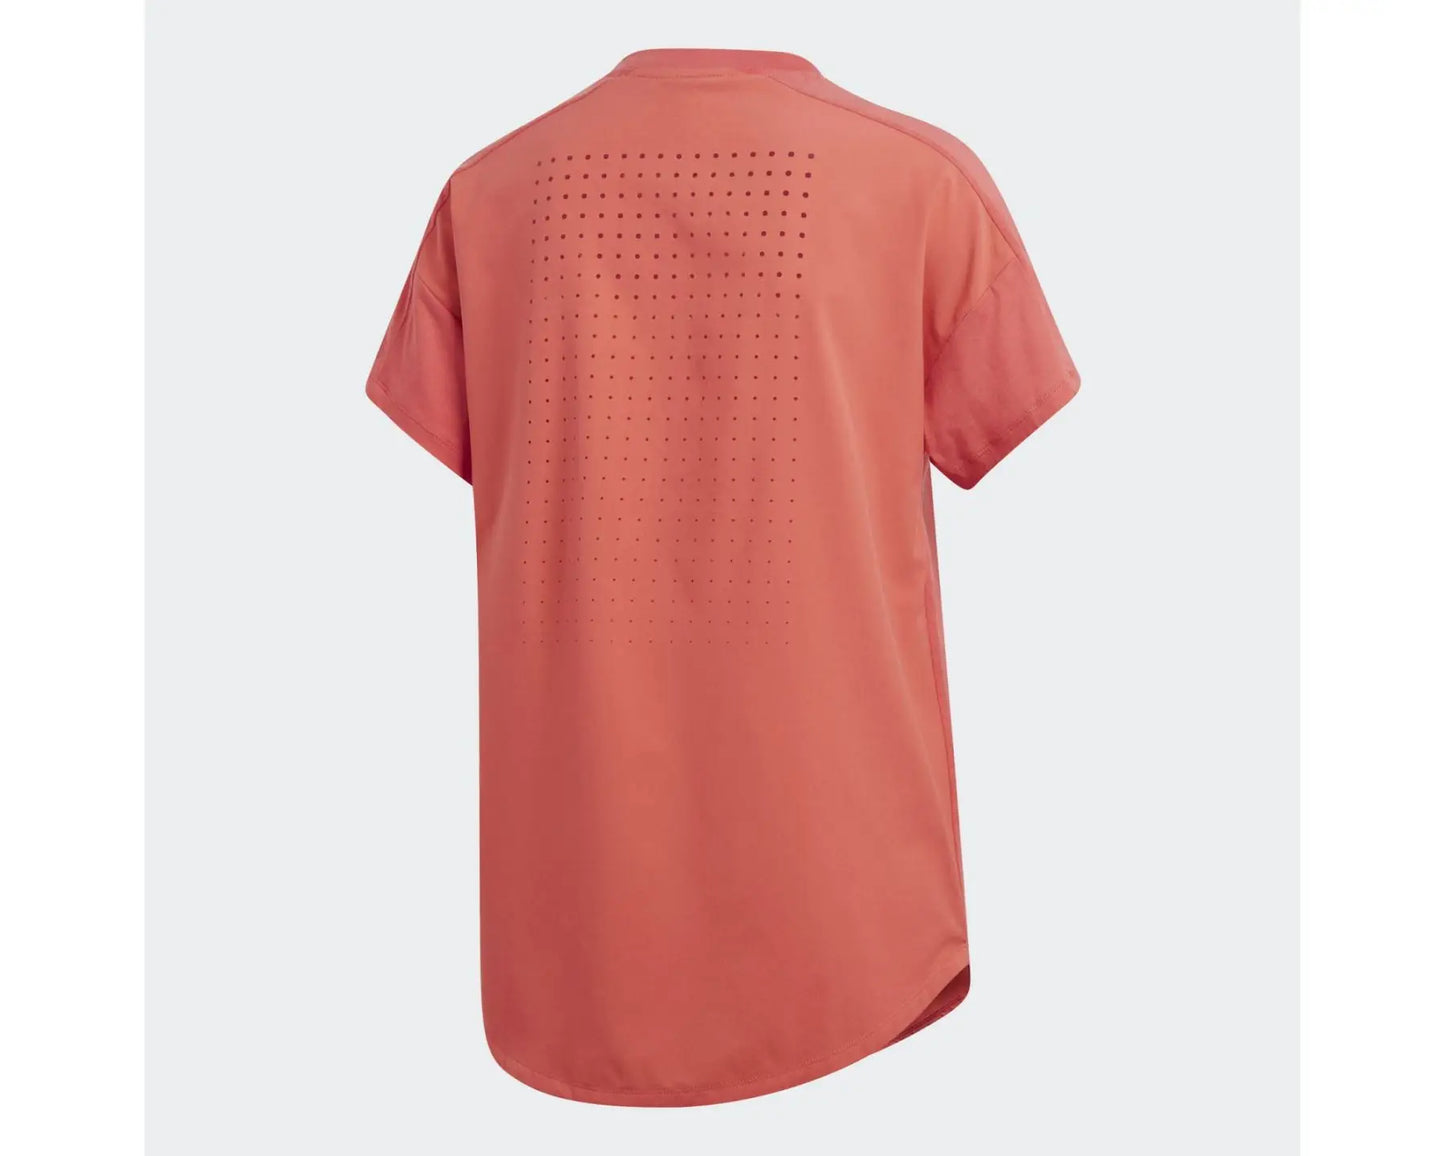 
                  
                    Adidas Original Women's Daily Wear T-78-Shirt Orange Color Sporty Walking Training Yoga Plates Sports Casual W Zne T-Shirt
                  
                